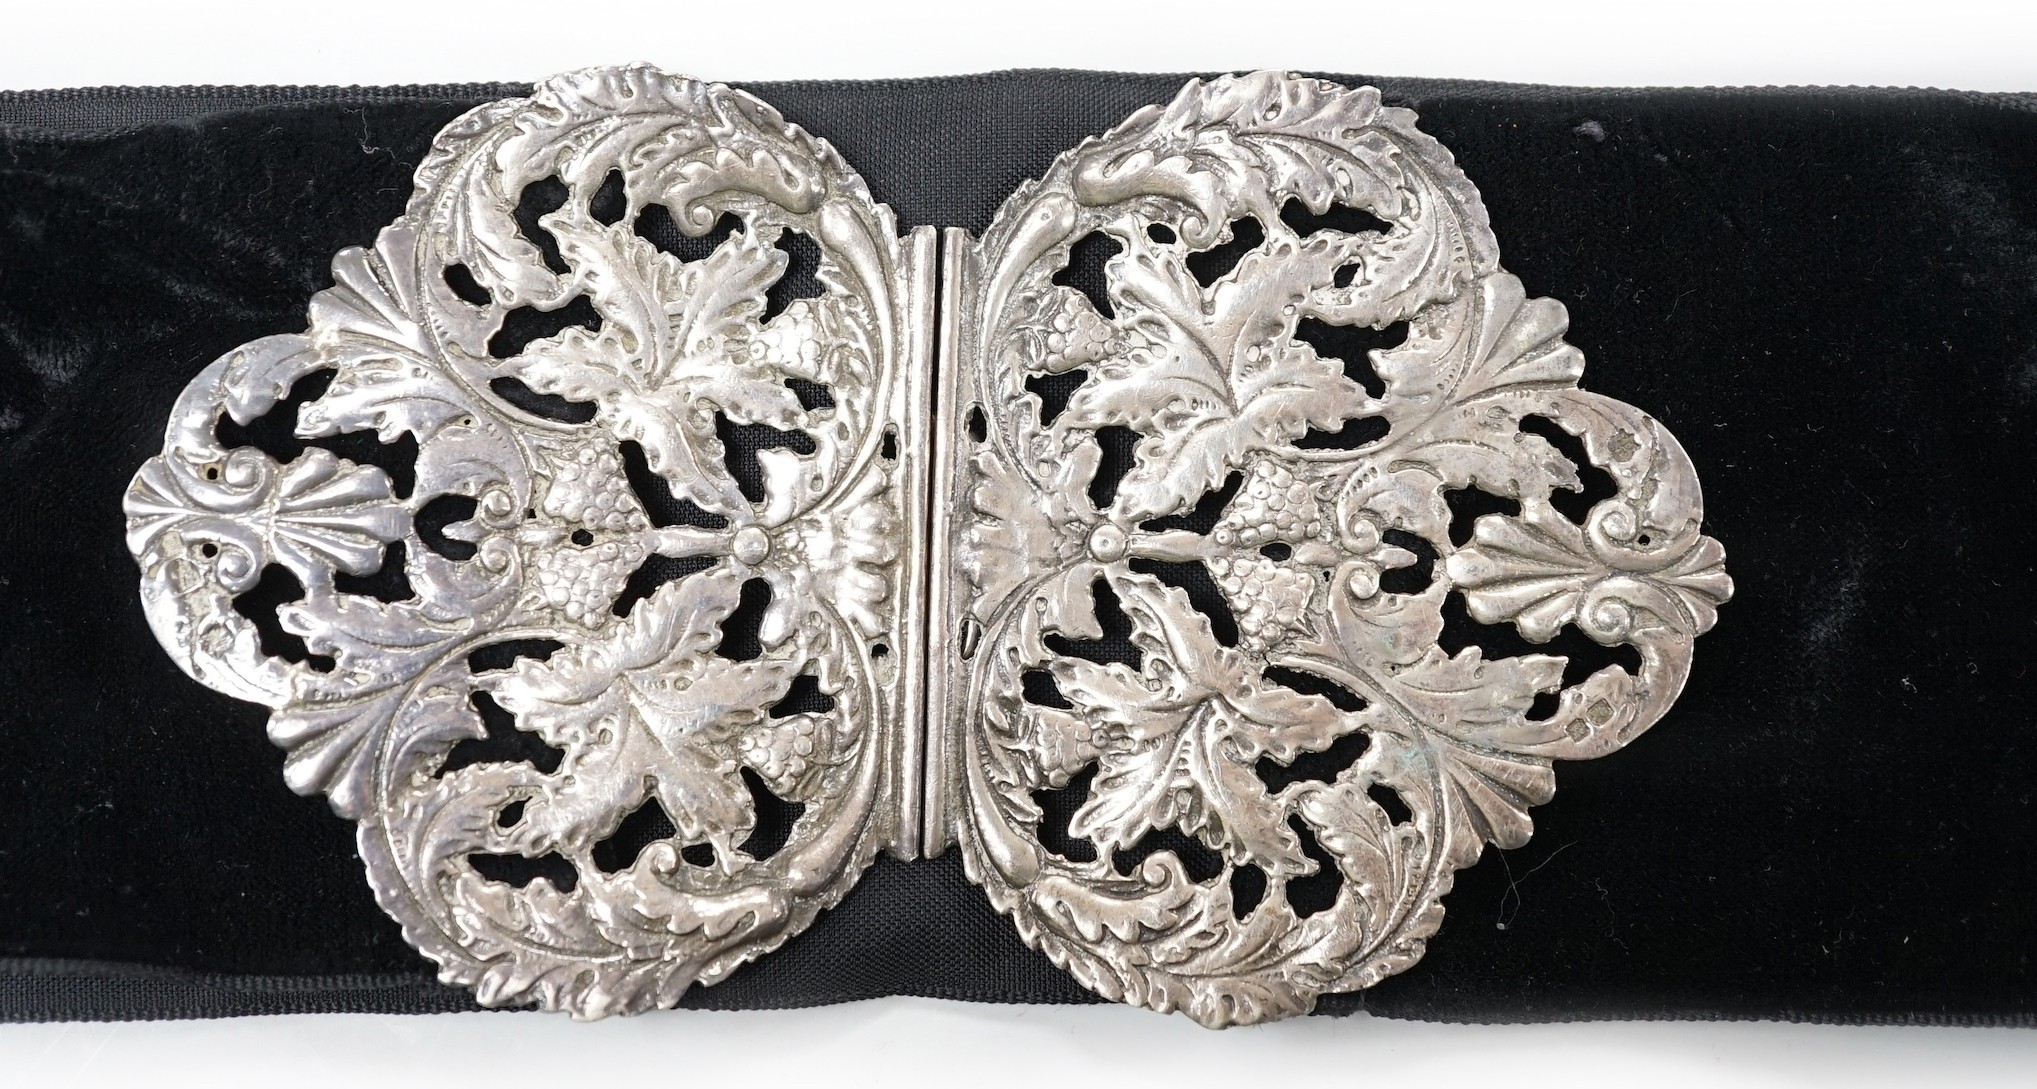 A late Victorian pierced silver belt buckle, on a black sash belt, James Deakin & Sons, Chester,